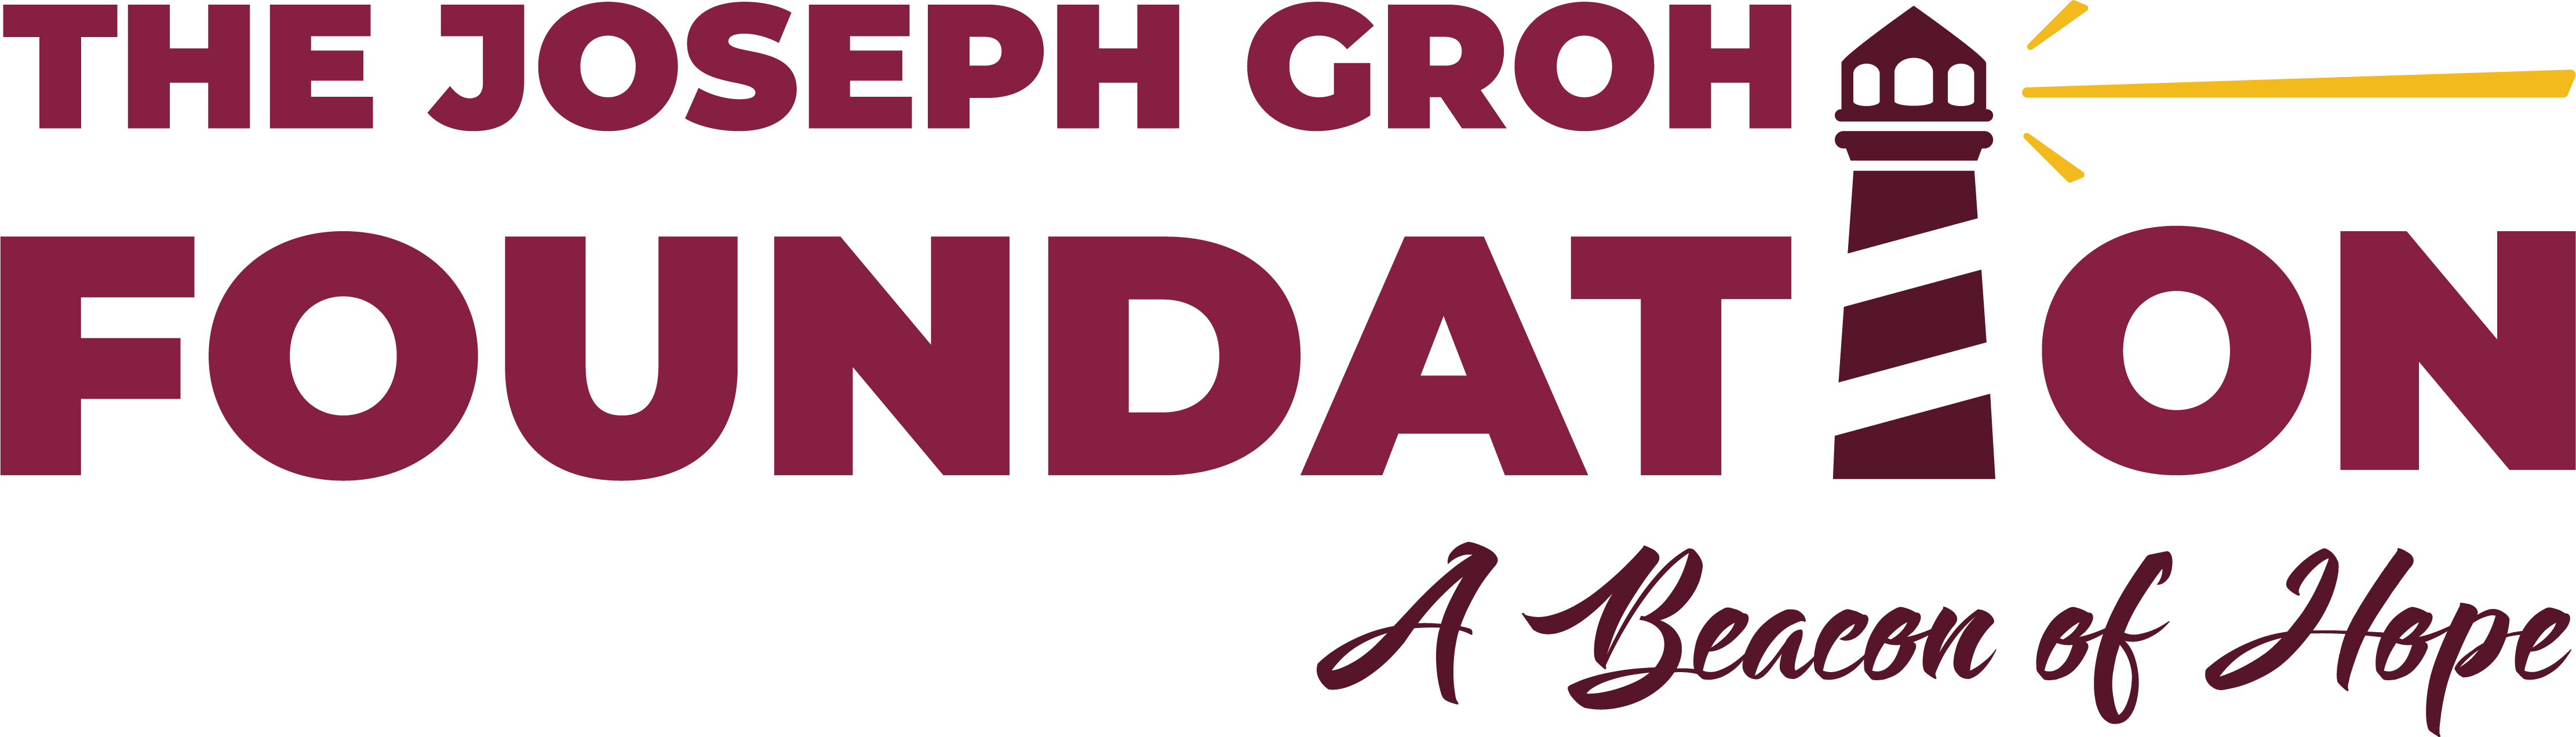 the joseph groh foundation logo